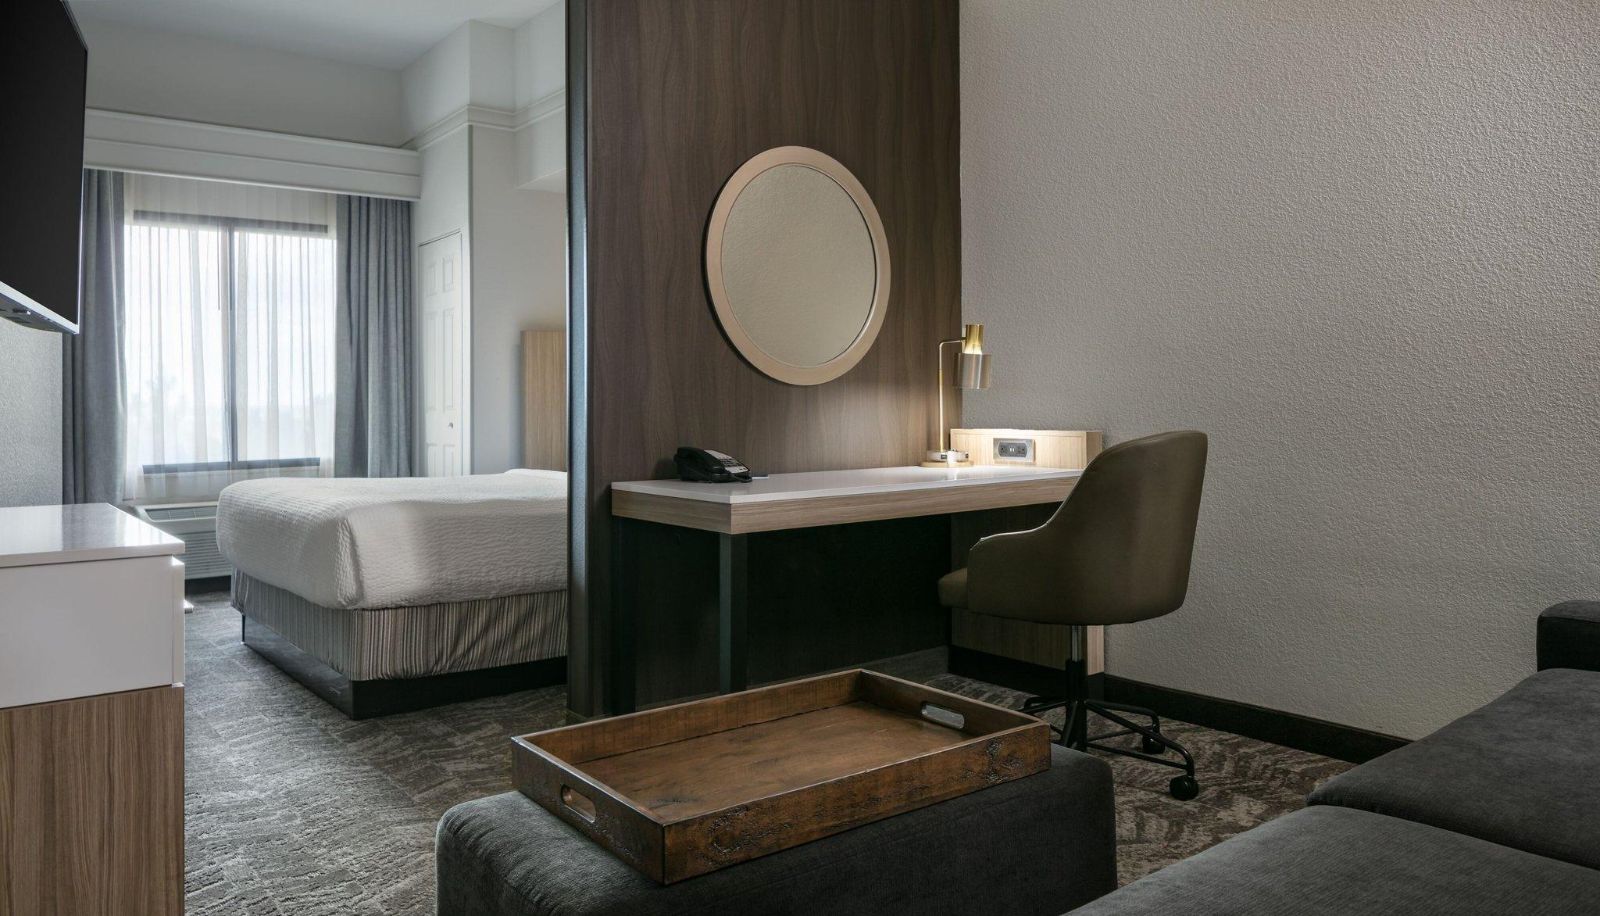 Hotel SpringHill Suites by Marriott Cheyenne